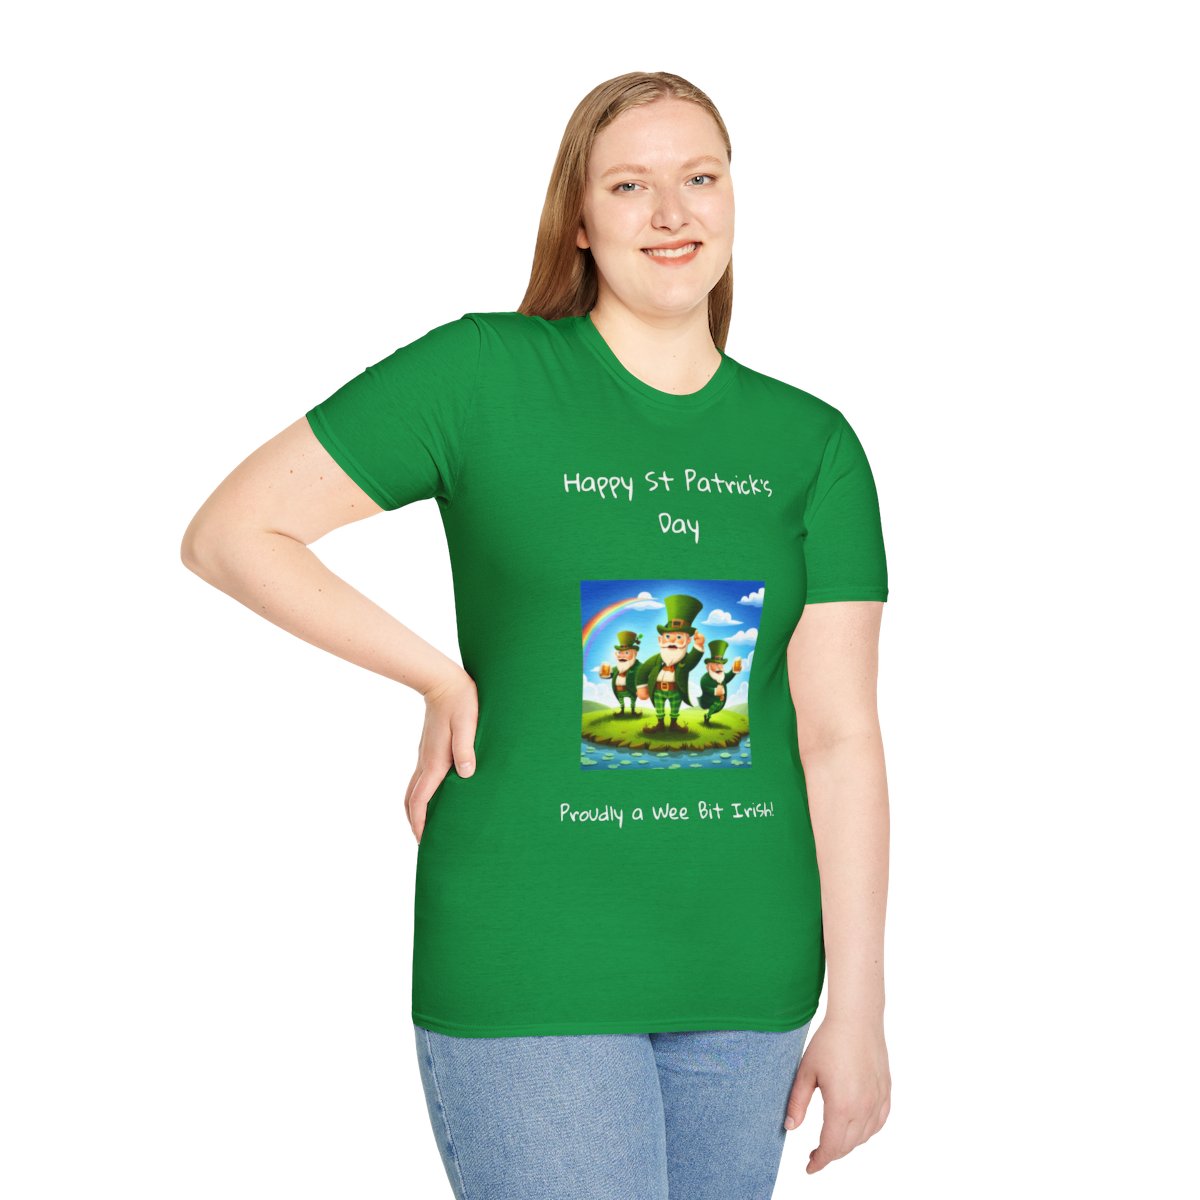 Happy St Patrick's Day, Wee Bit Irish Celebration Tee!  - T-Shirt product thumbnail image